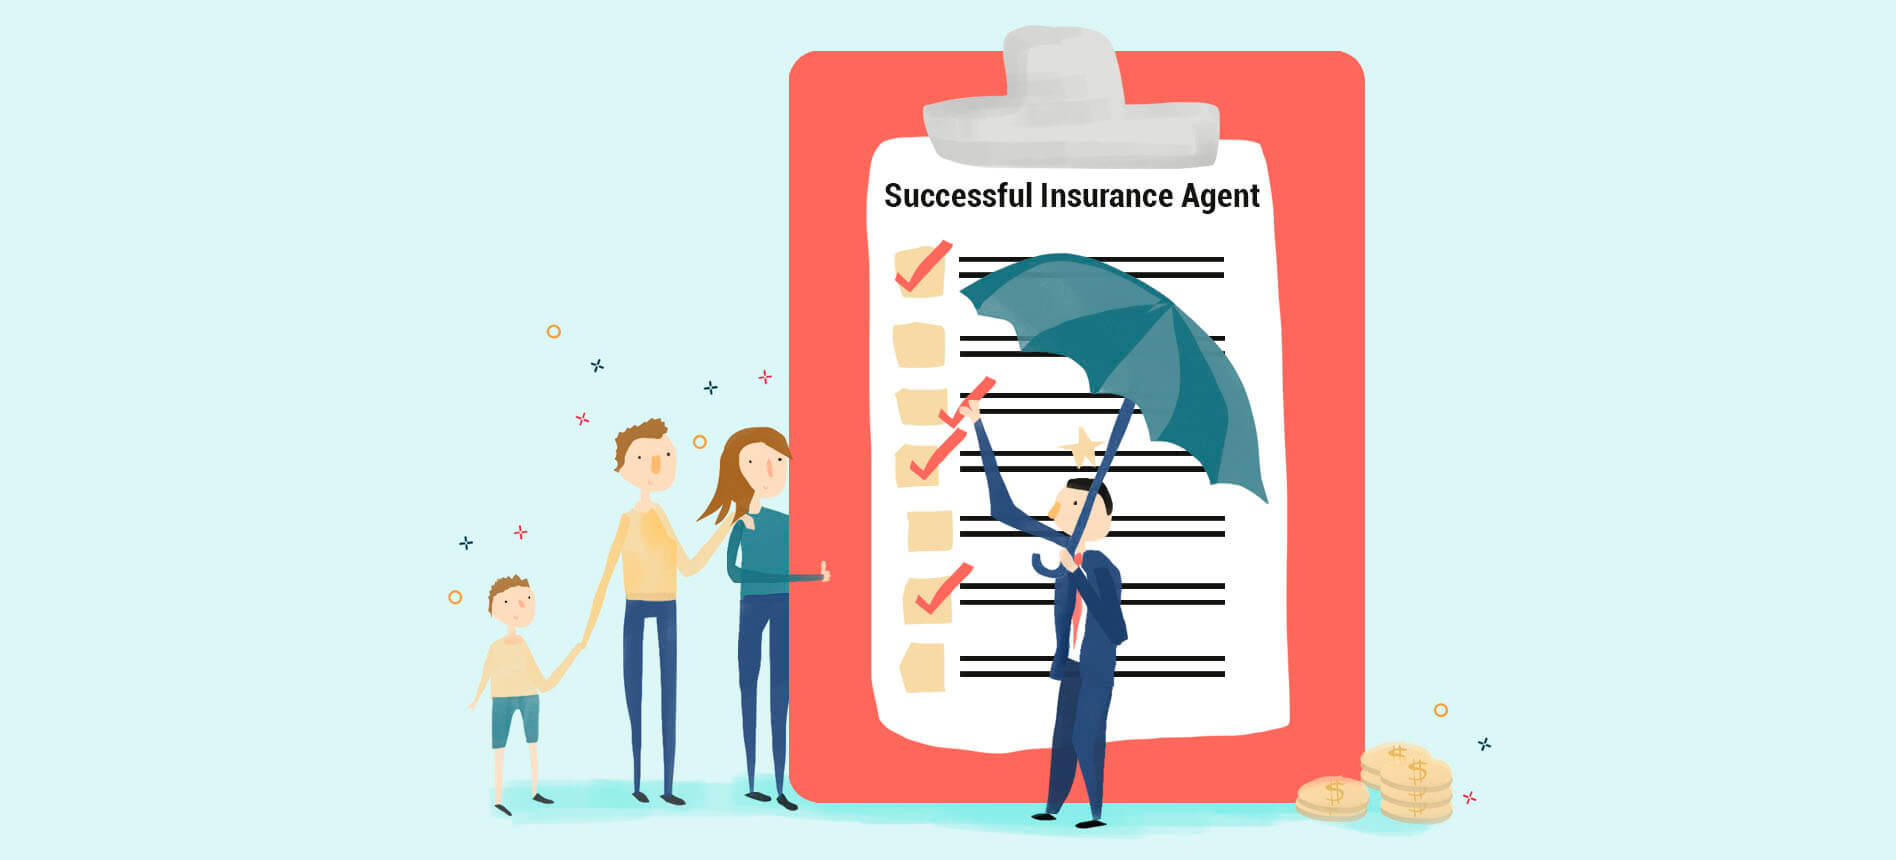 Becoming an insurance agent